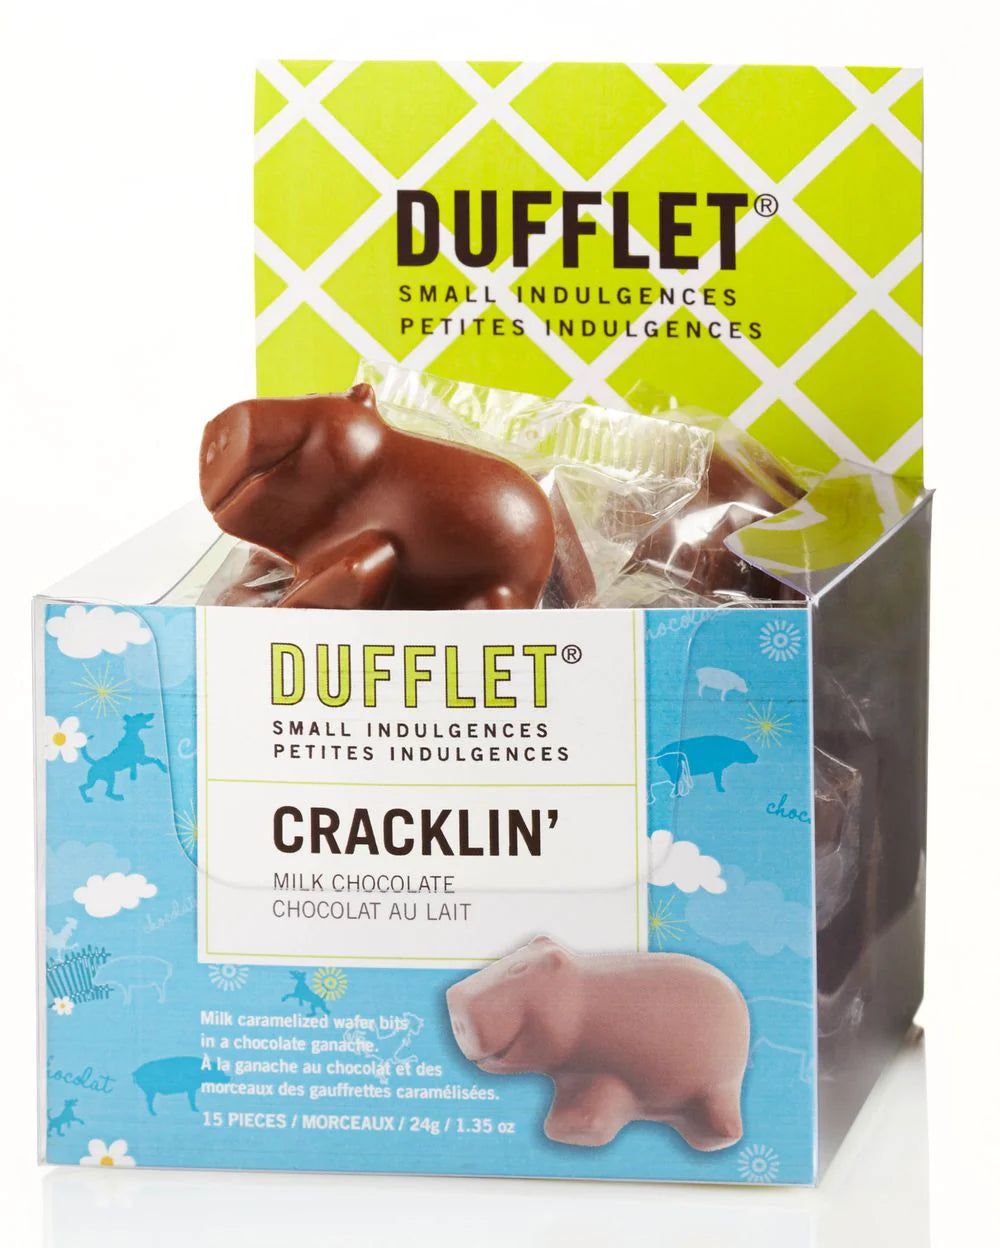 DUFFLET - CRACKLIN' PIGS IN A BASKET MILK CHOCOLATE